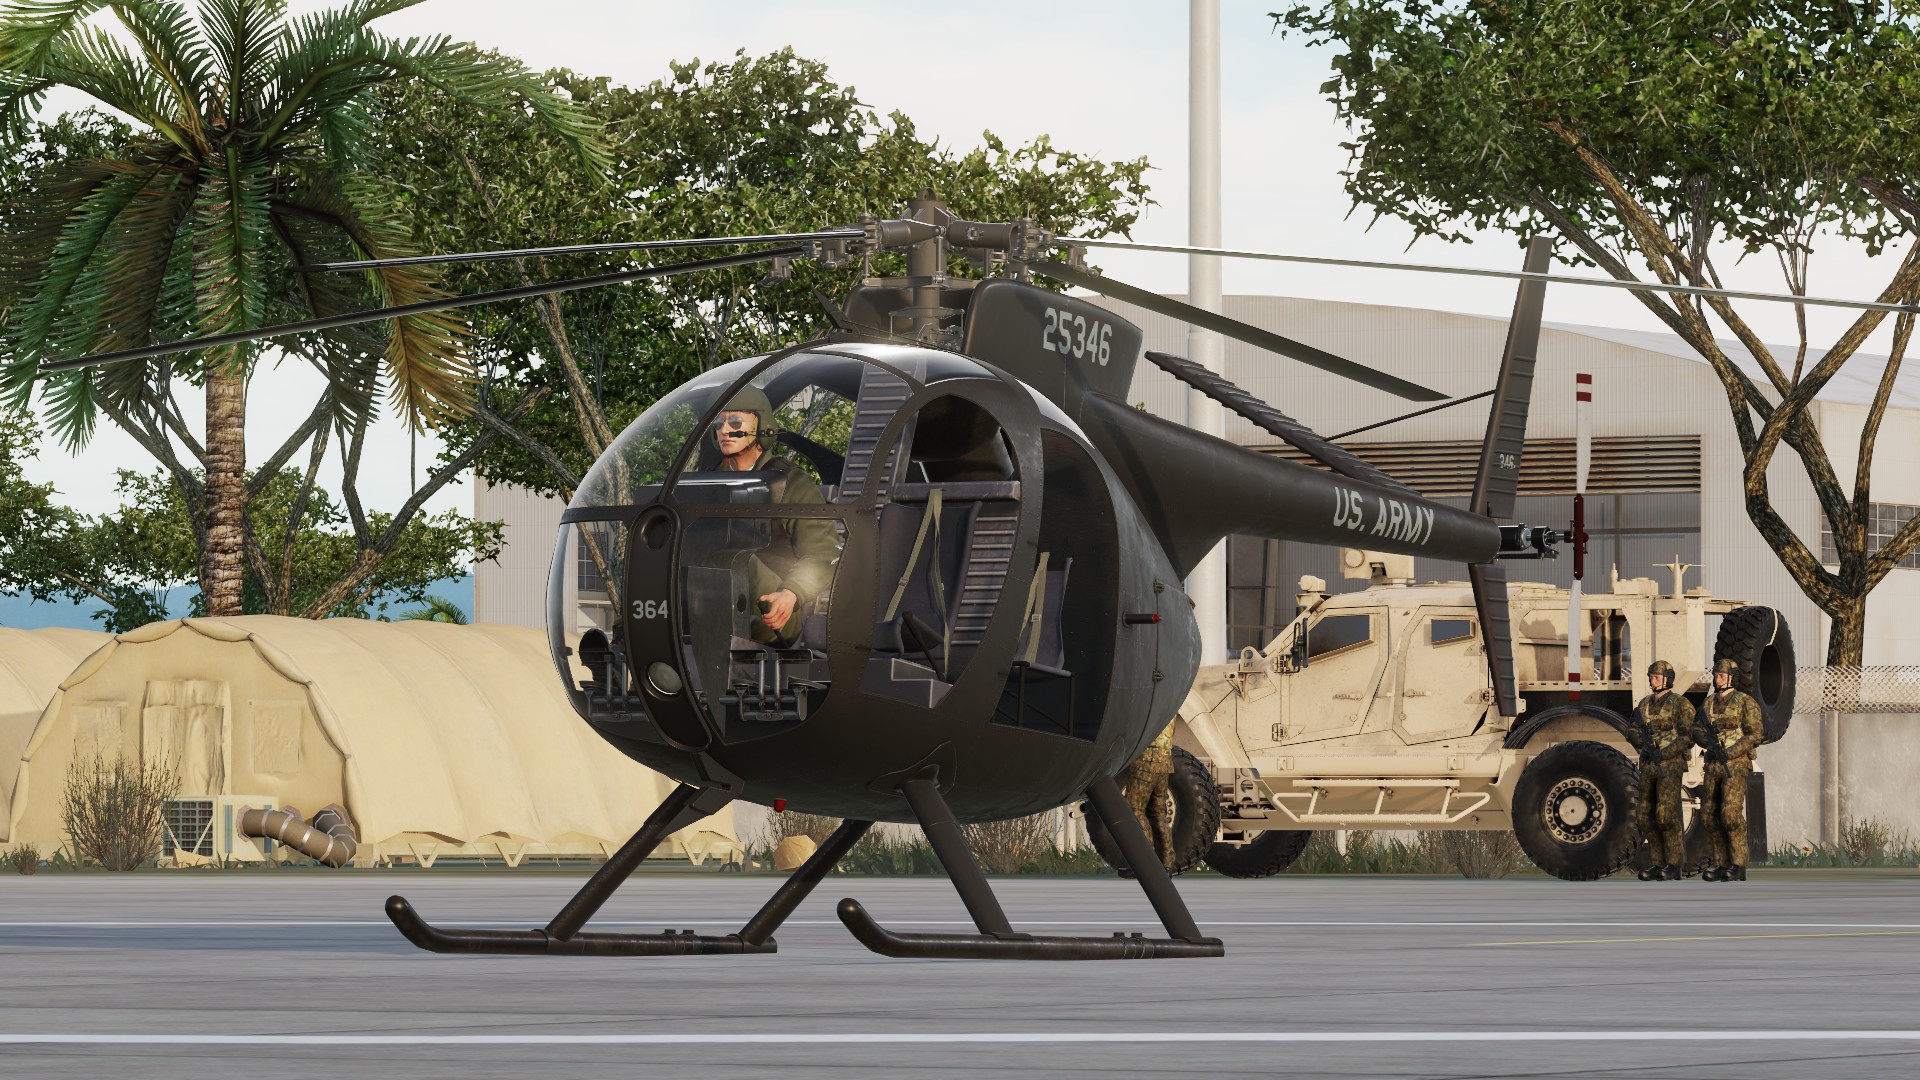 US Army 160th "Nightstalkers" SOAR OH-6A